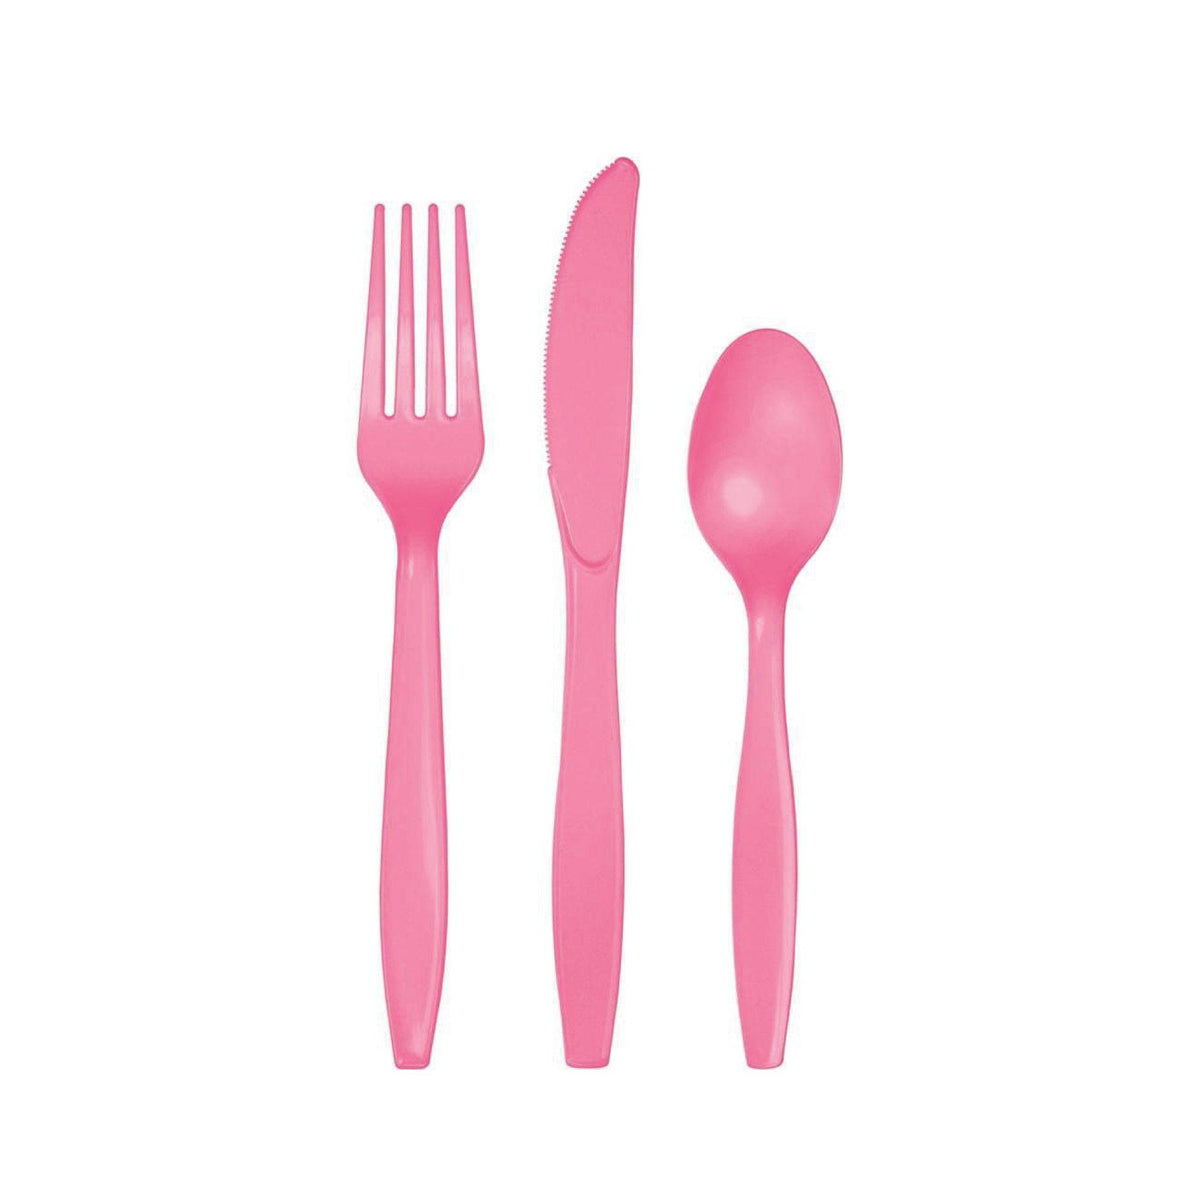 Classic Silver & Bright Pink Premium Plastic Knives 20ct